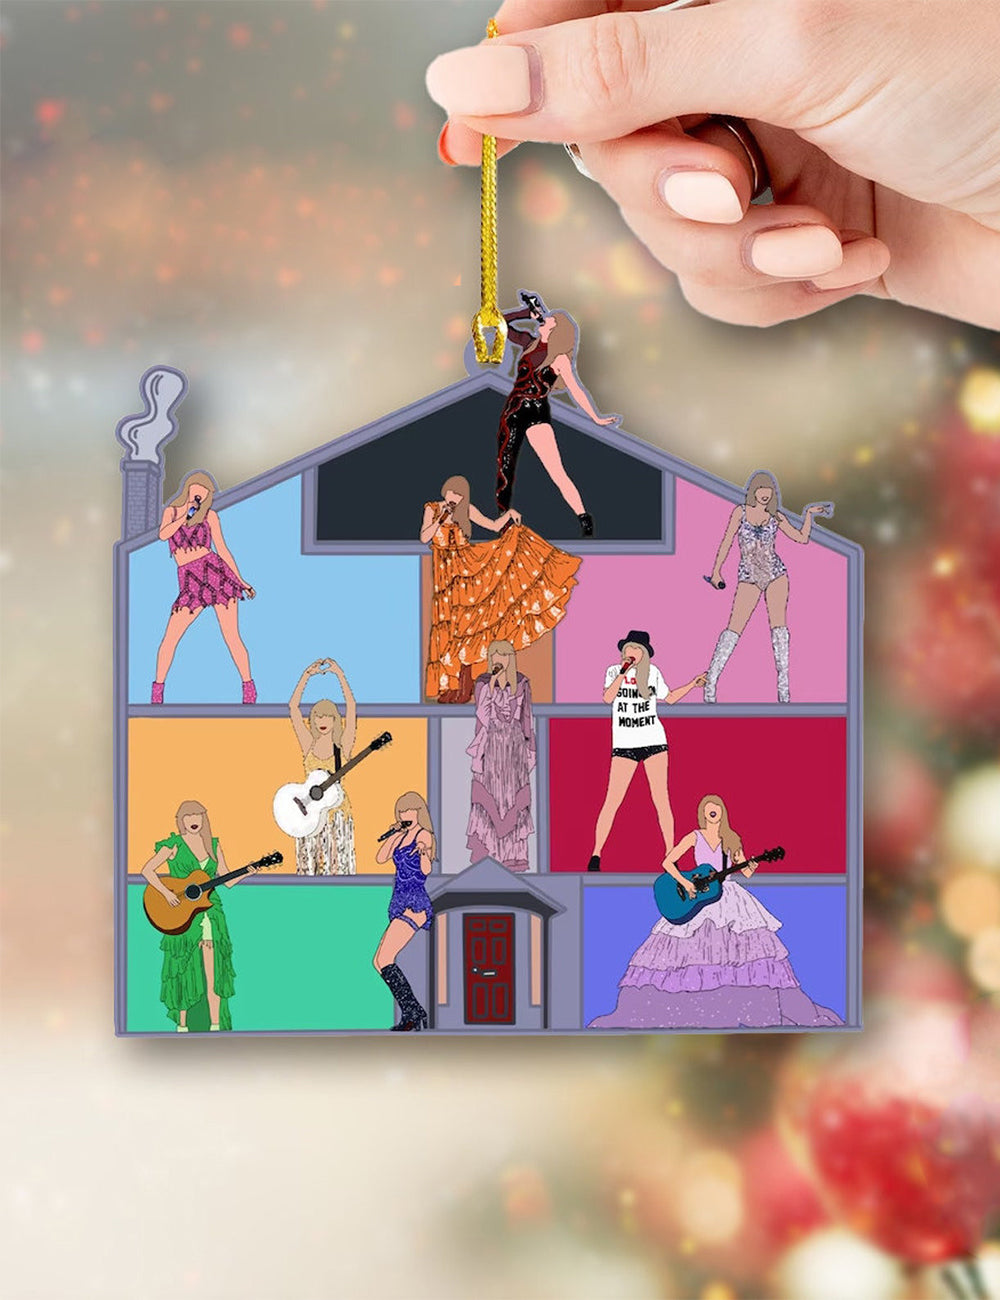 Taylor Swift The Eras Tour 2023 Christmas Tree Decorations Ornament -  Honateez